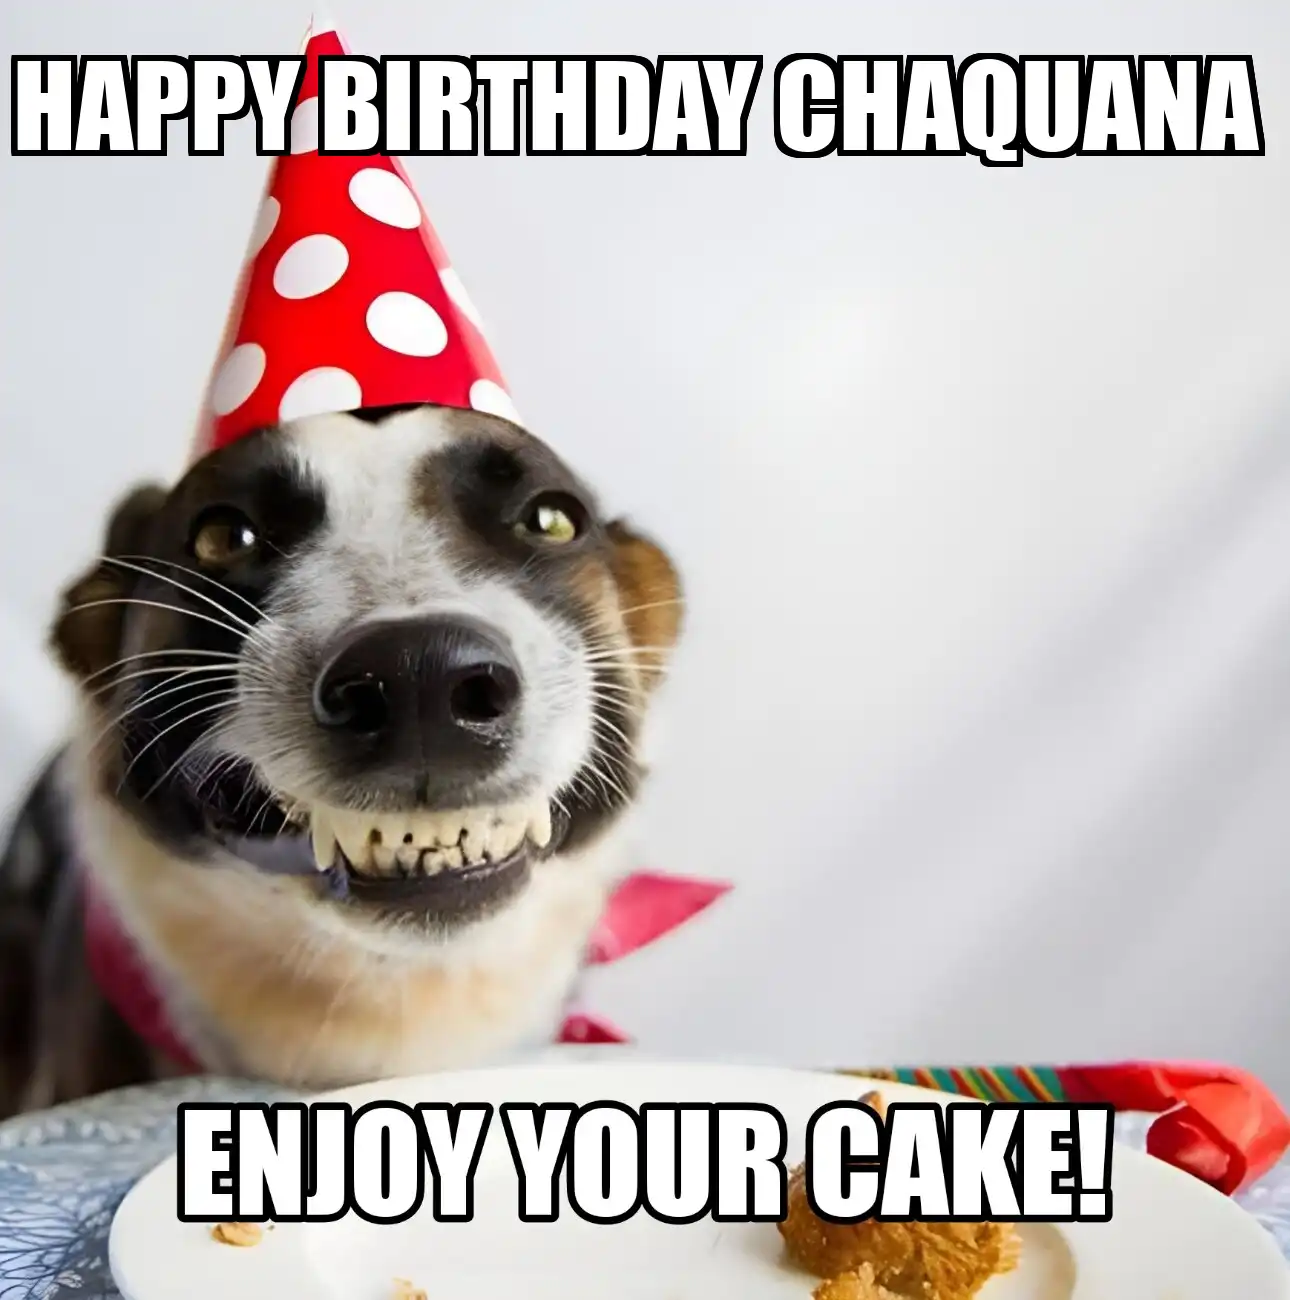 Happy Birthday Chaquana Enjoy Your Cake Dog Meme